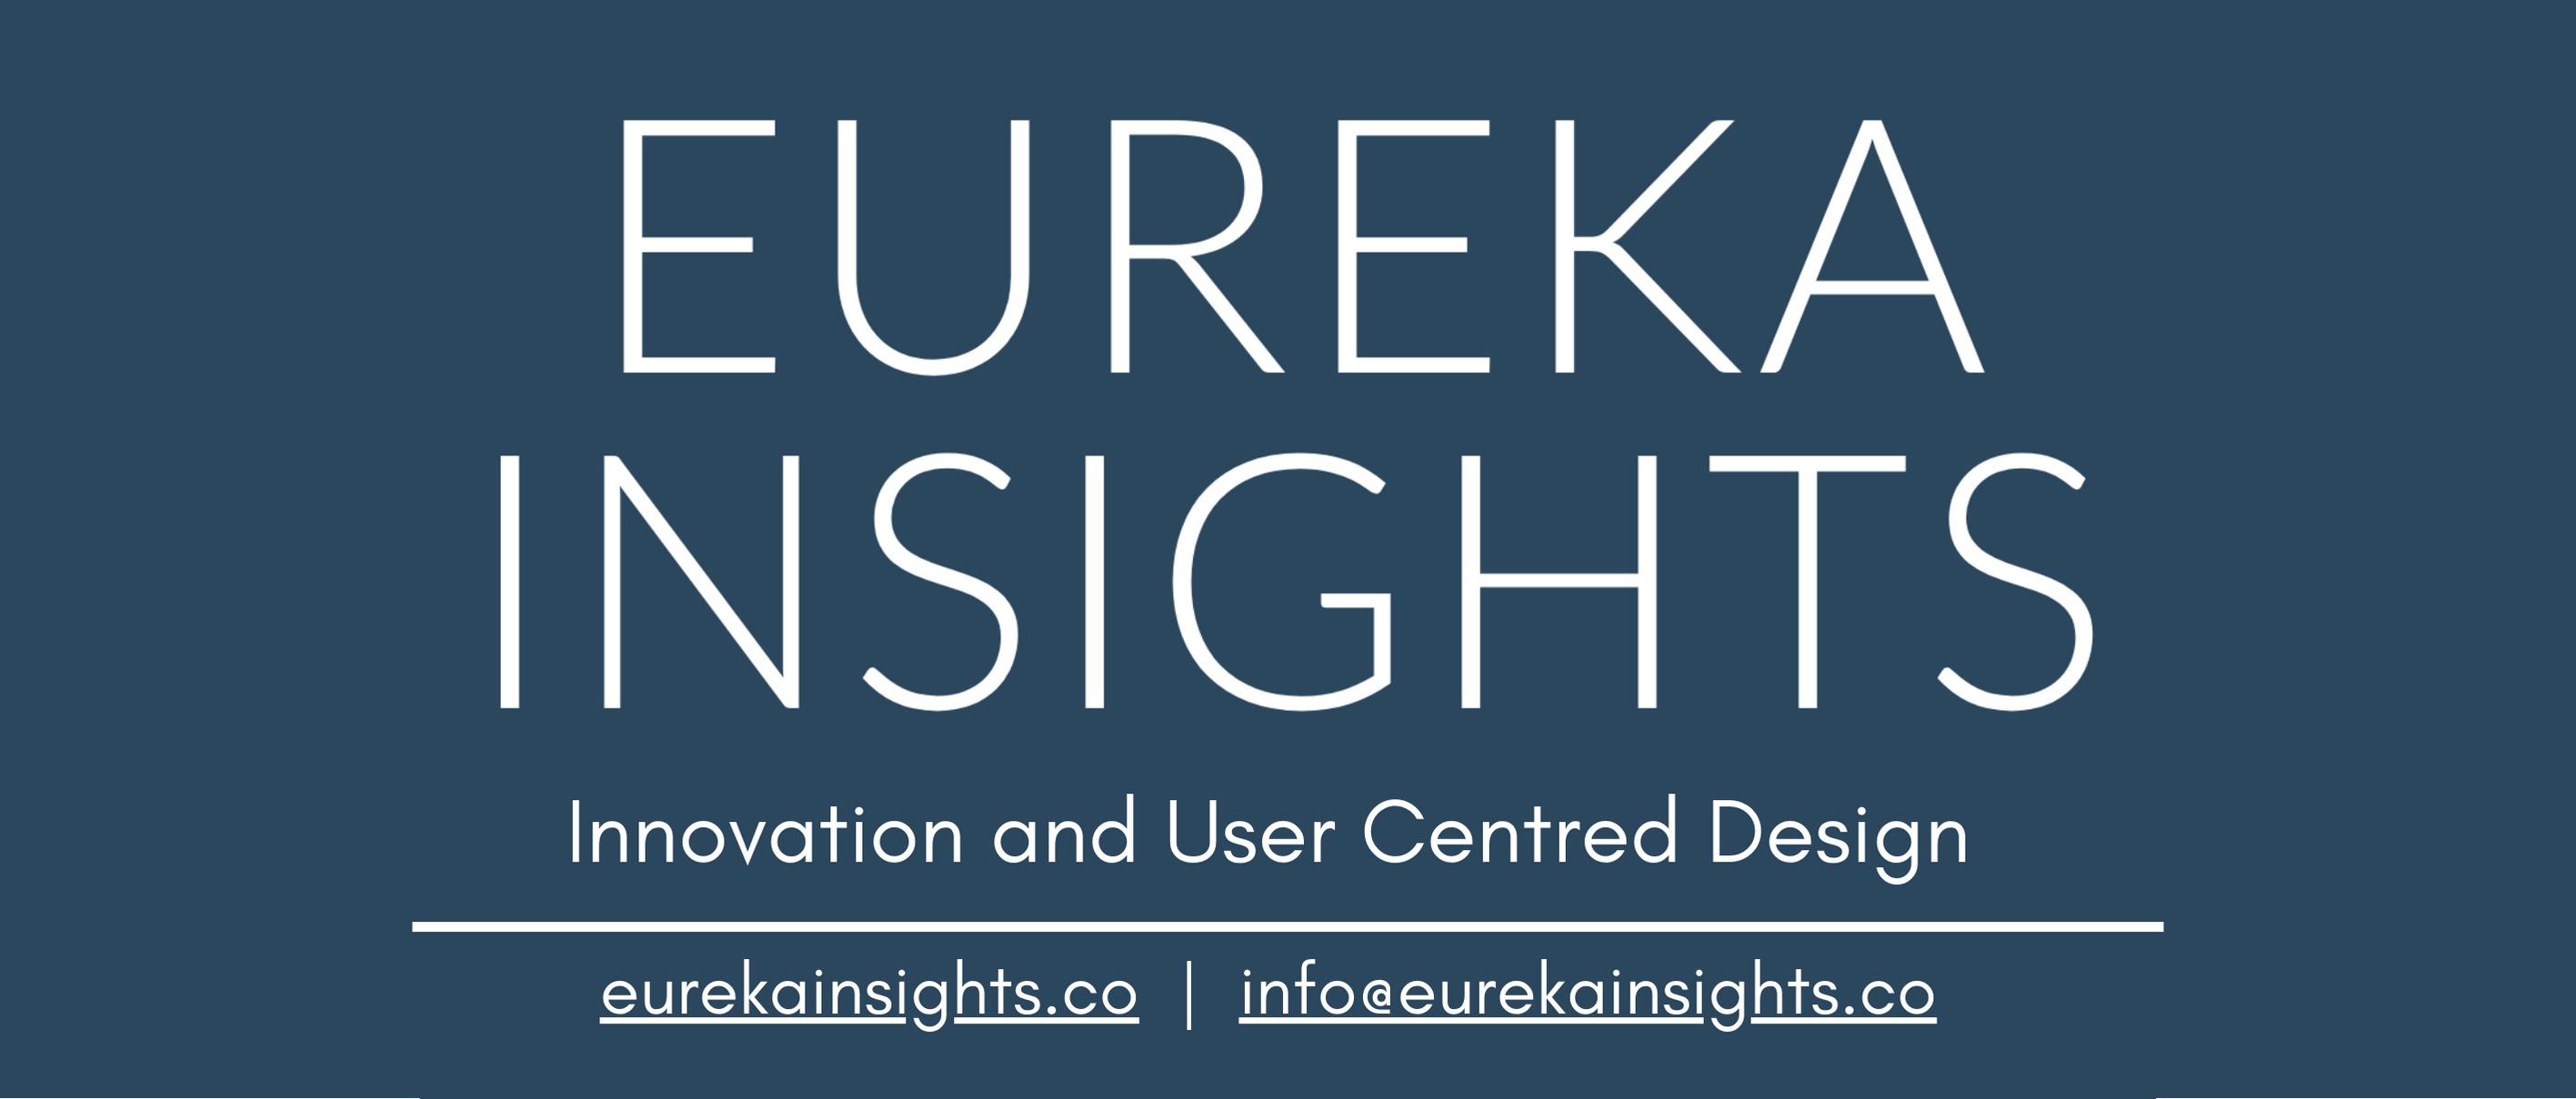 Advert for Eureka Insights. 